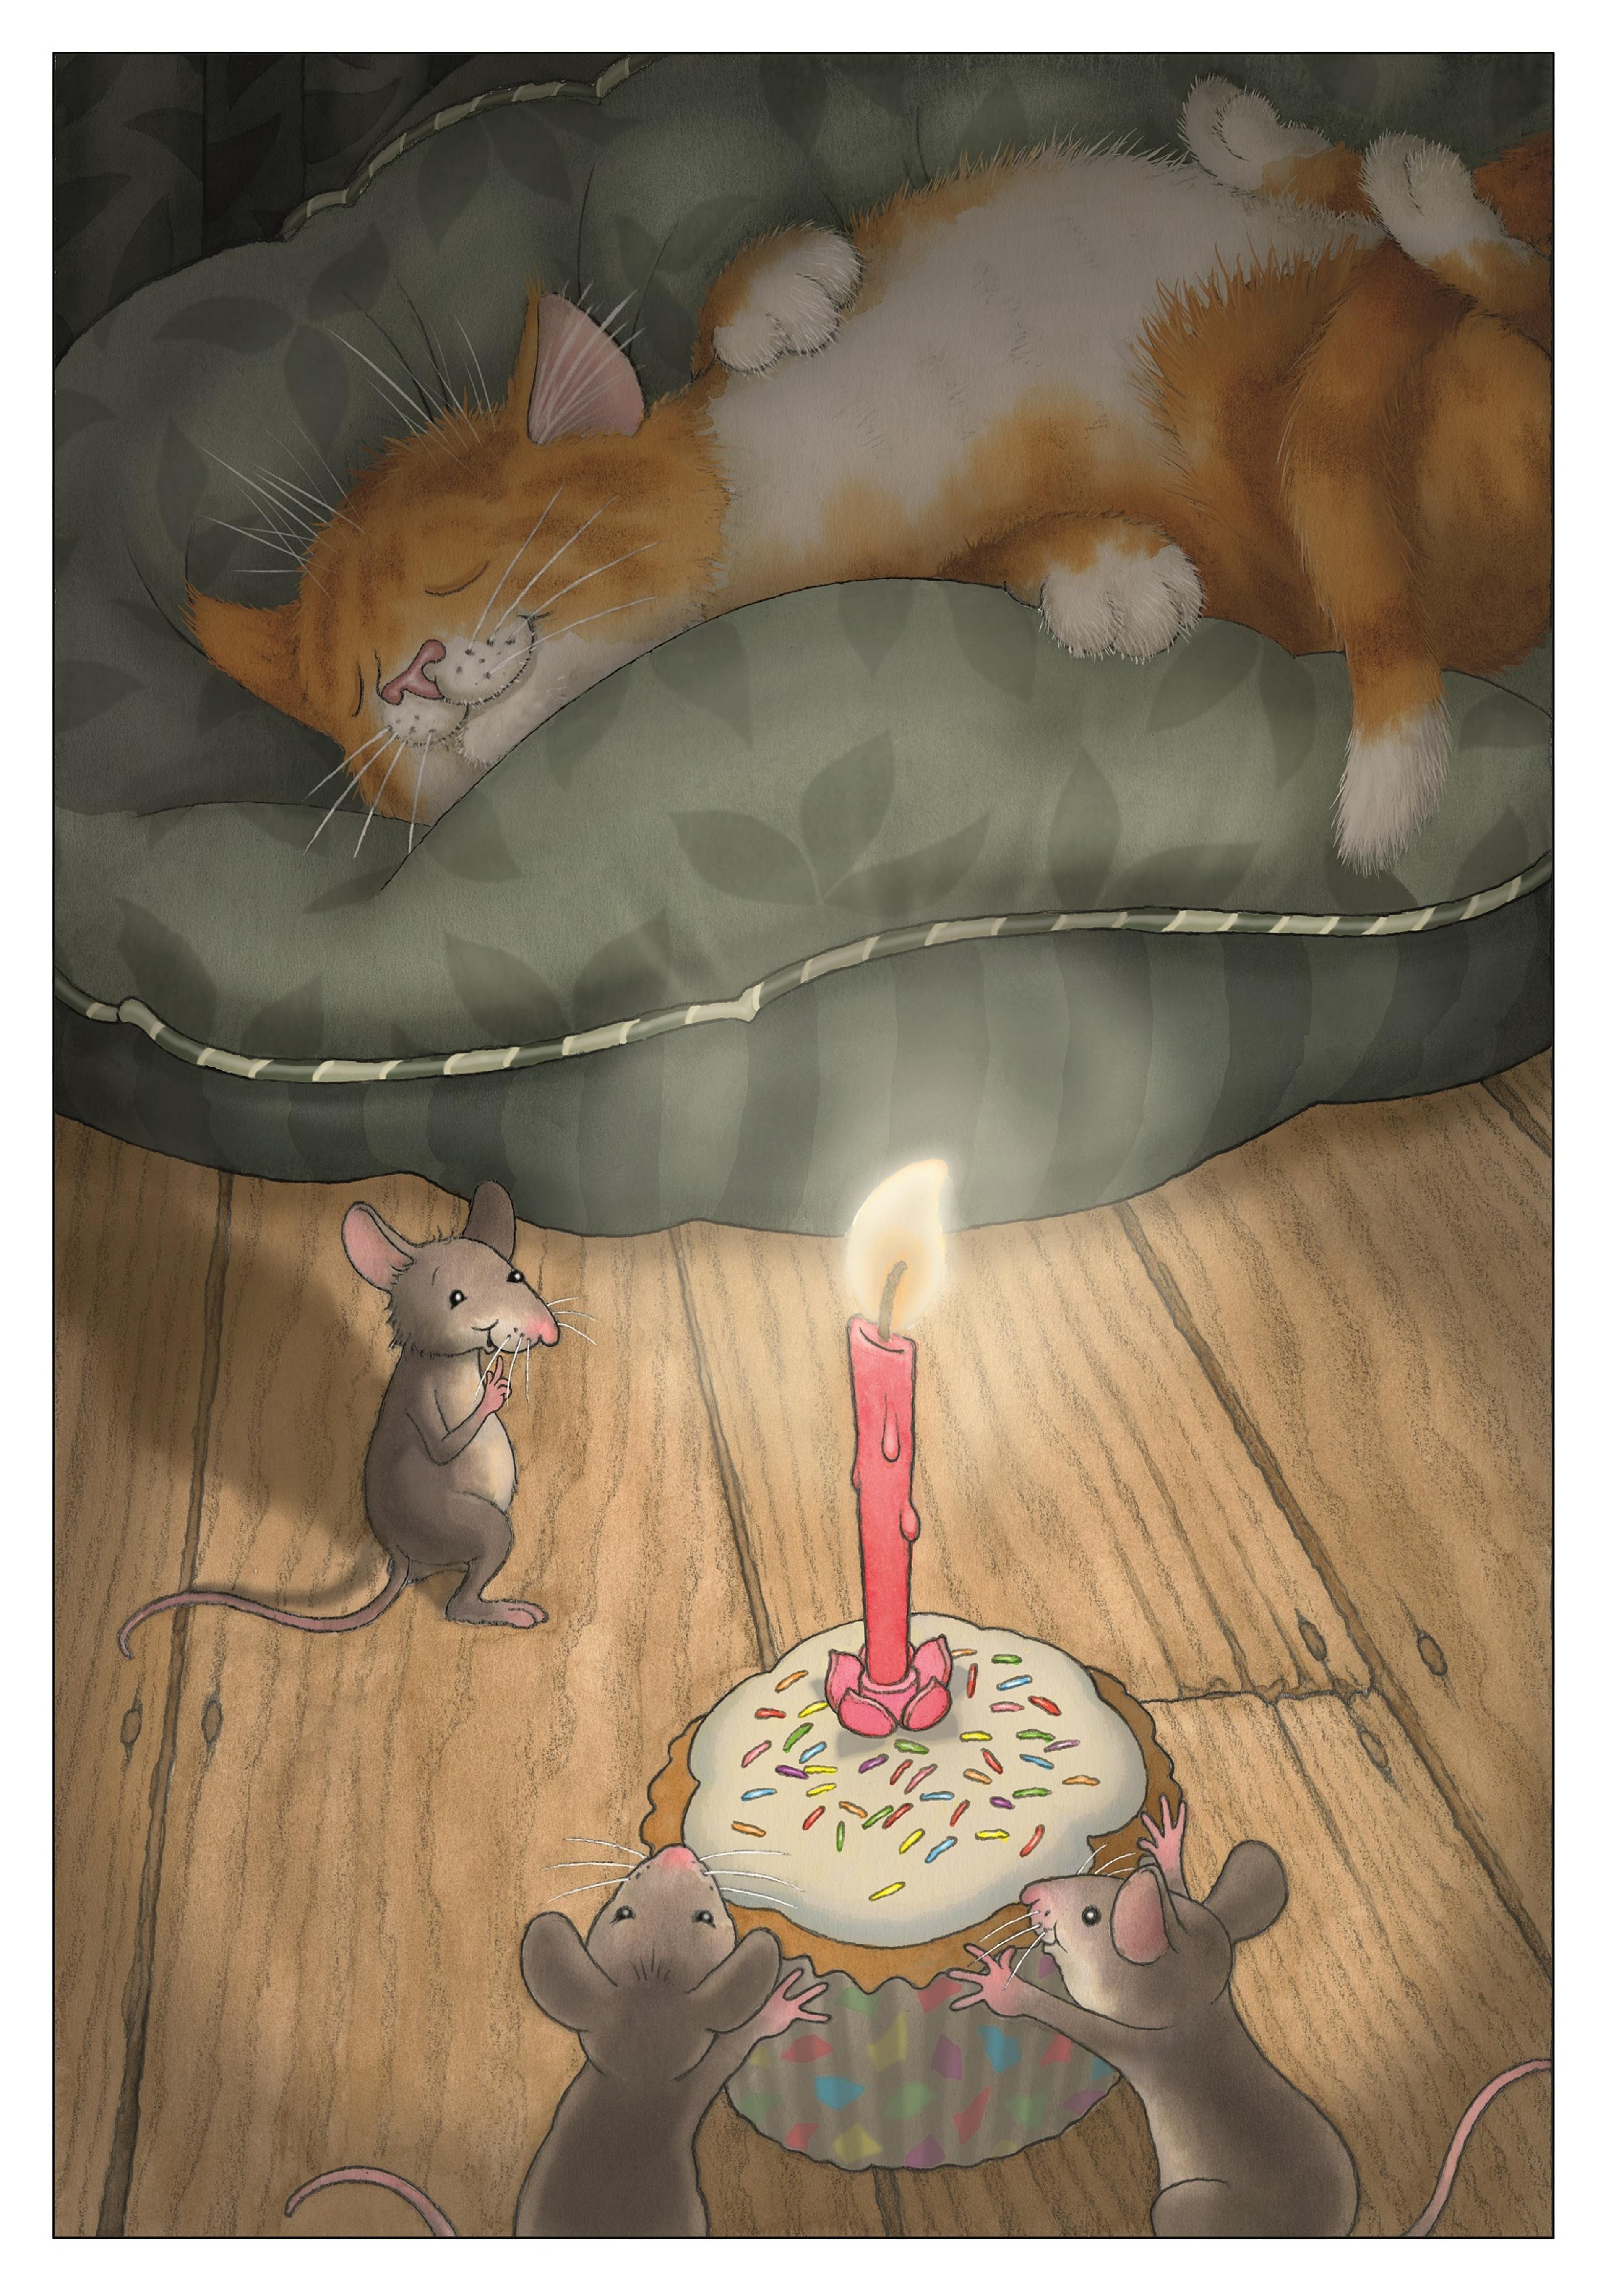 Illustration of three mice pushing a birthday cake towards a sleeping cat